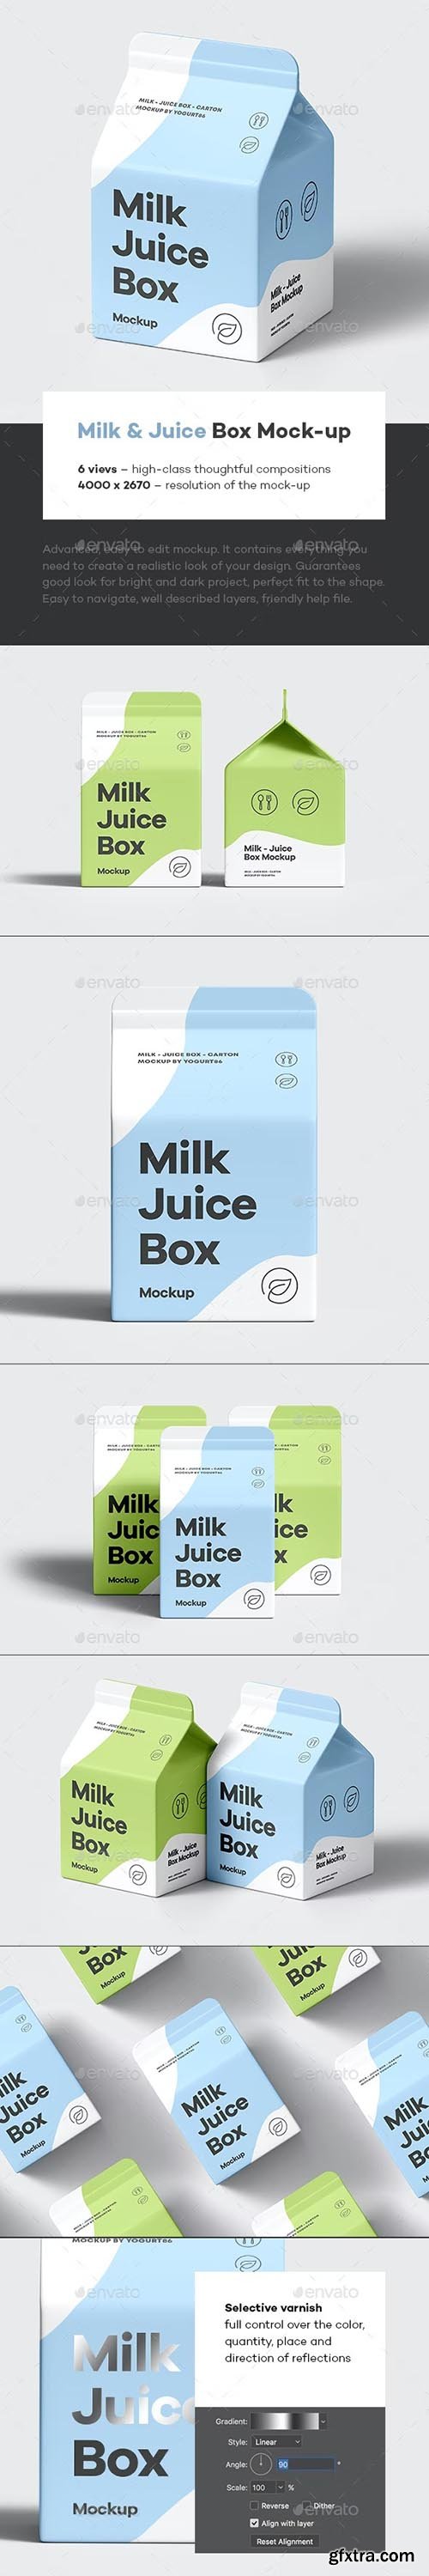 GraphicRiver - Milk Juice Box Mock-up 39926306